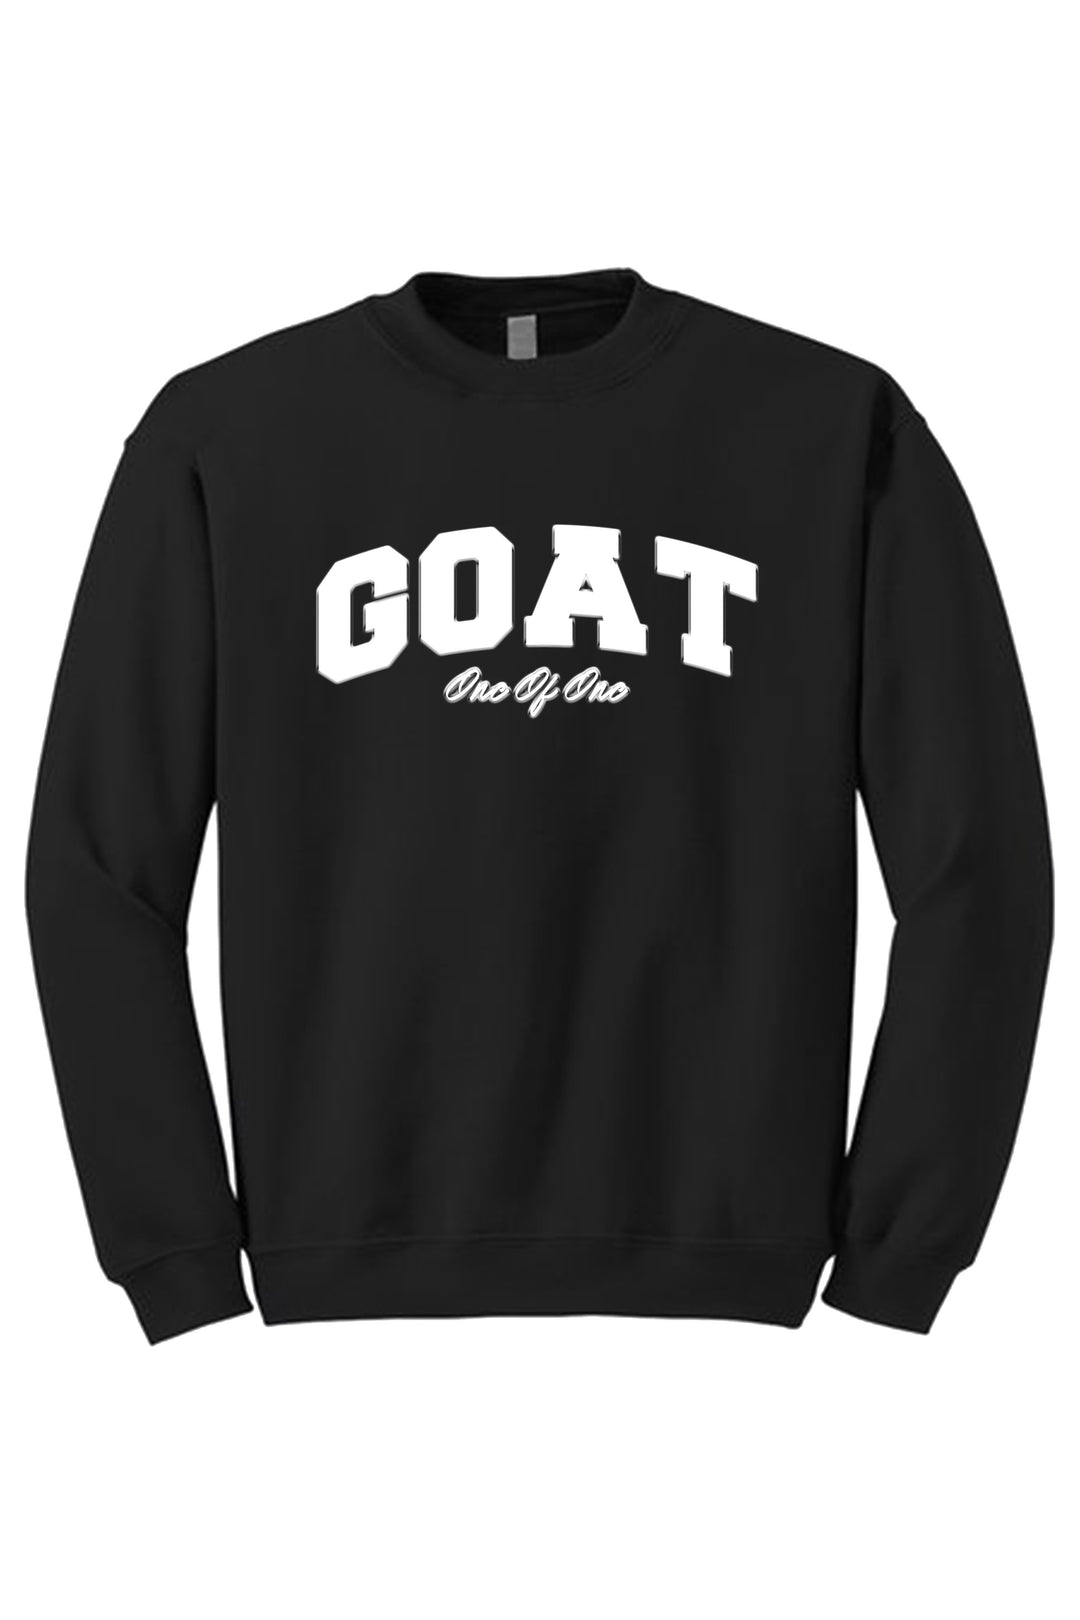 Puff Print Goat Crewneck Sweatshirt (White Logo) - Zamage